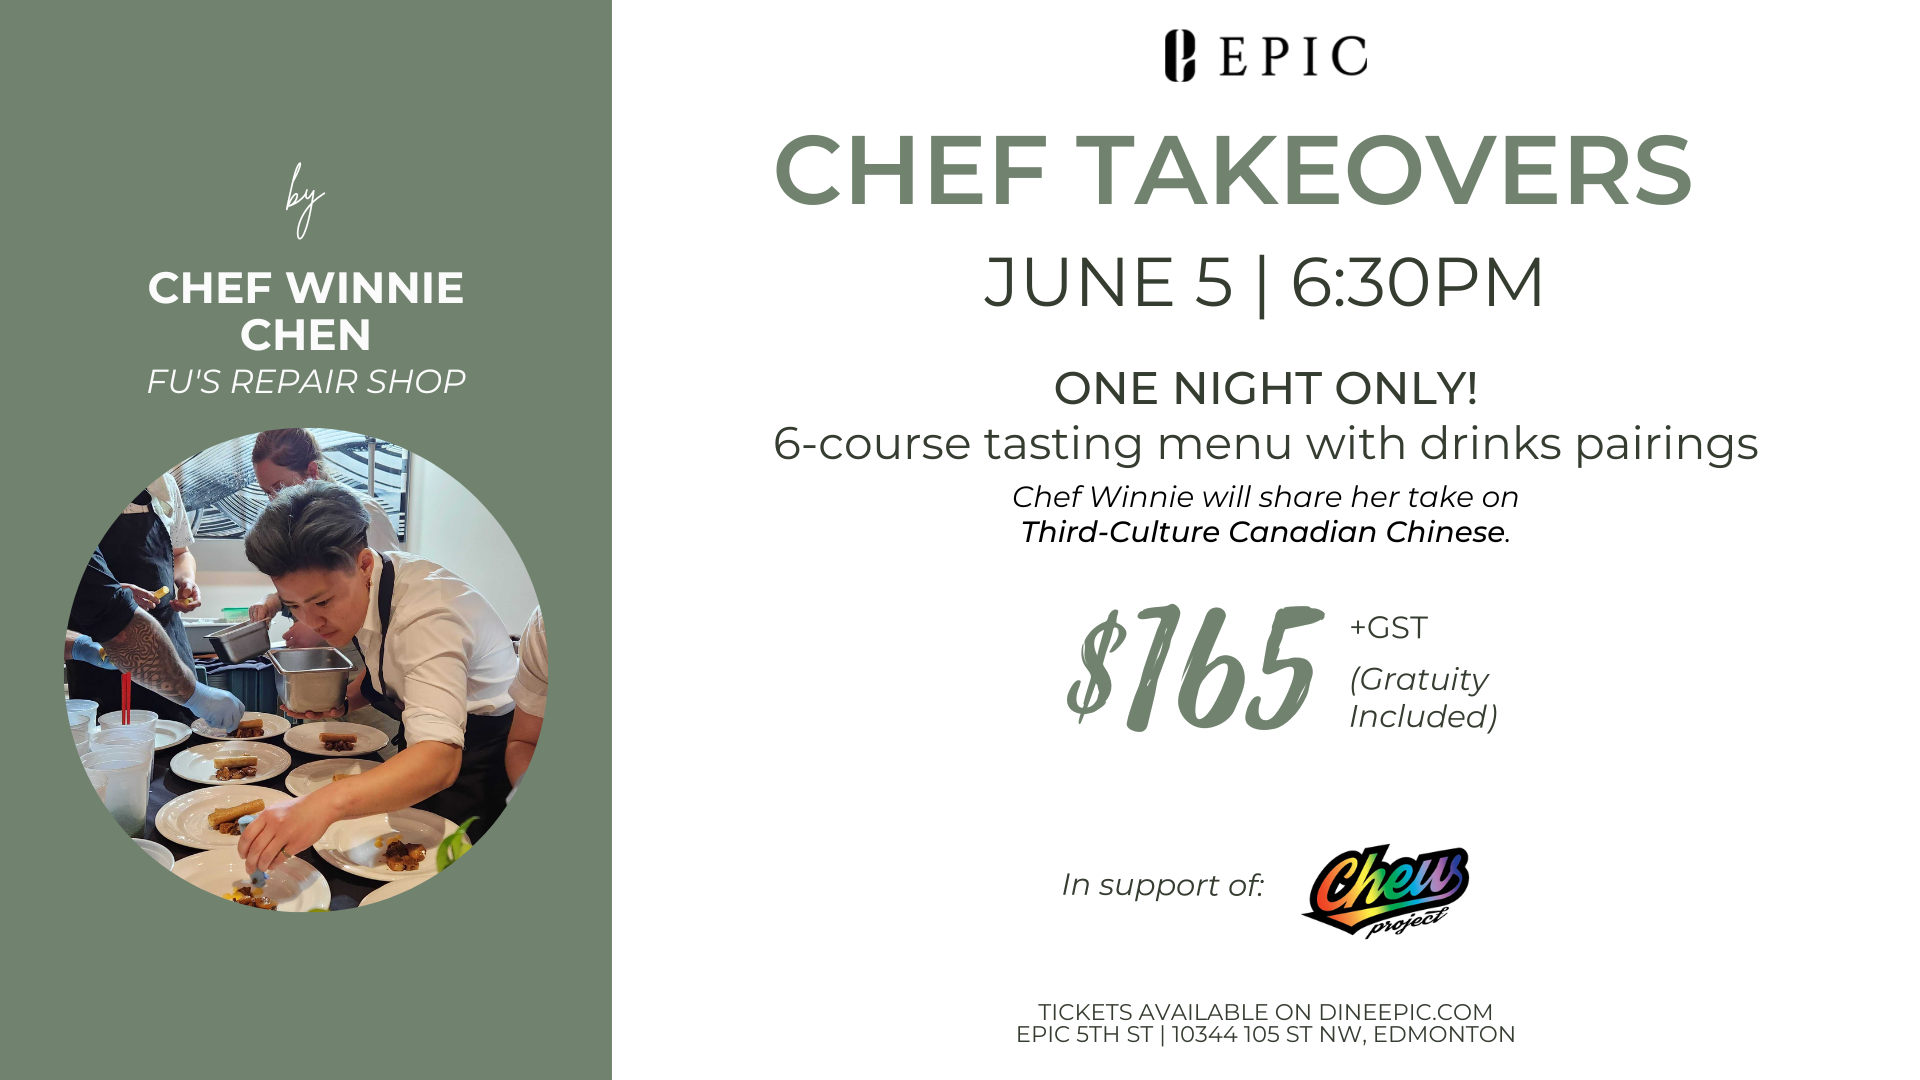 EPIC Chef Takeover by Chef Winnie Chen